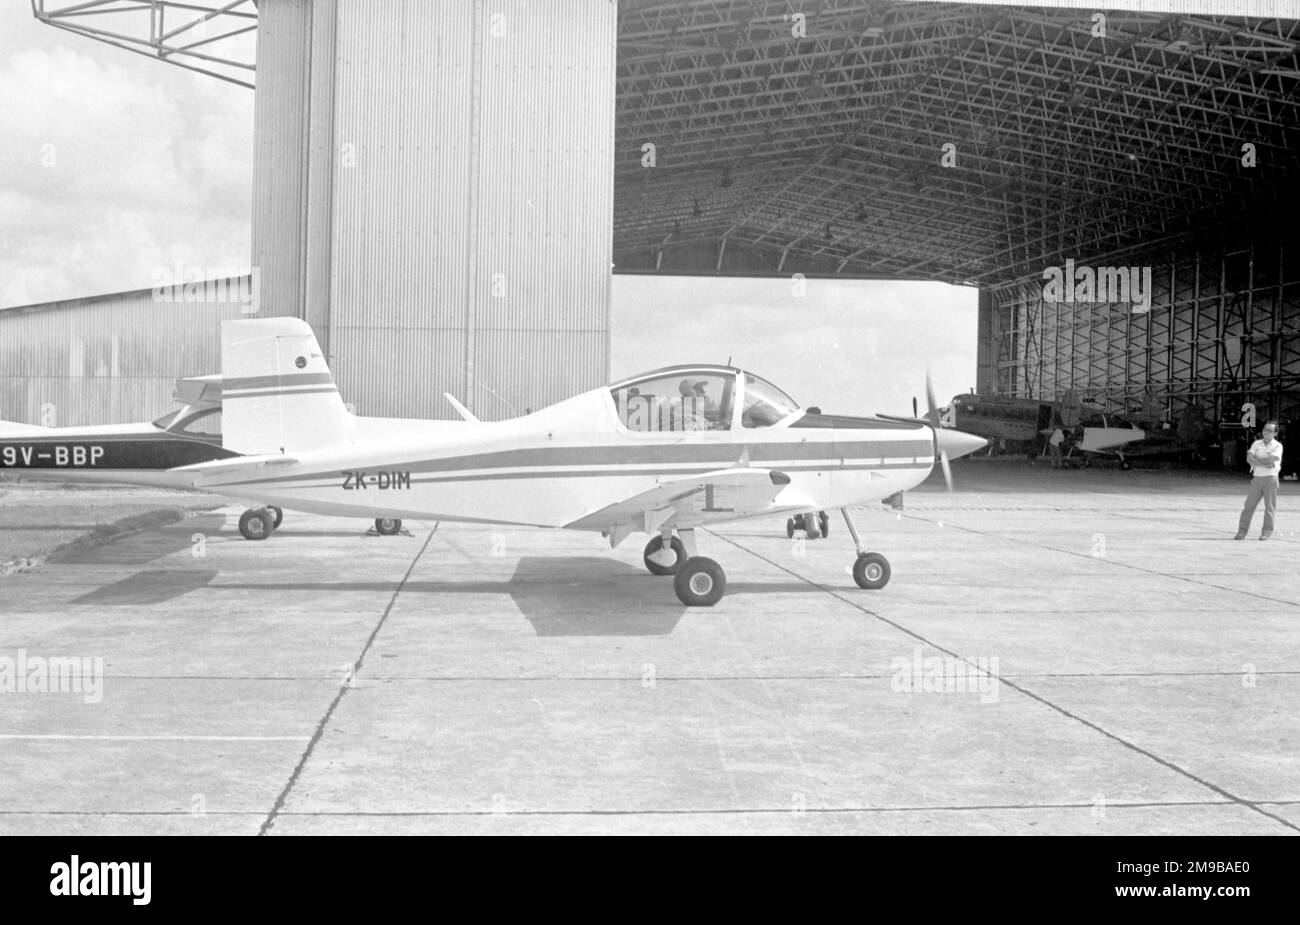 Aero Engine Services Ltd CT/4 Airtrainer ZK-DIM (msn 002) Foto de stock